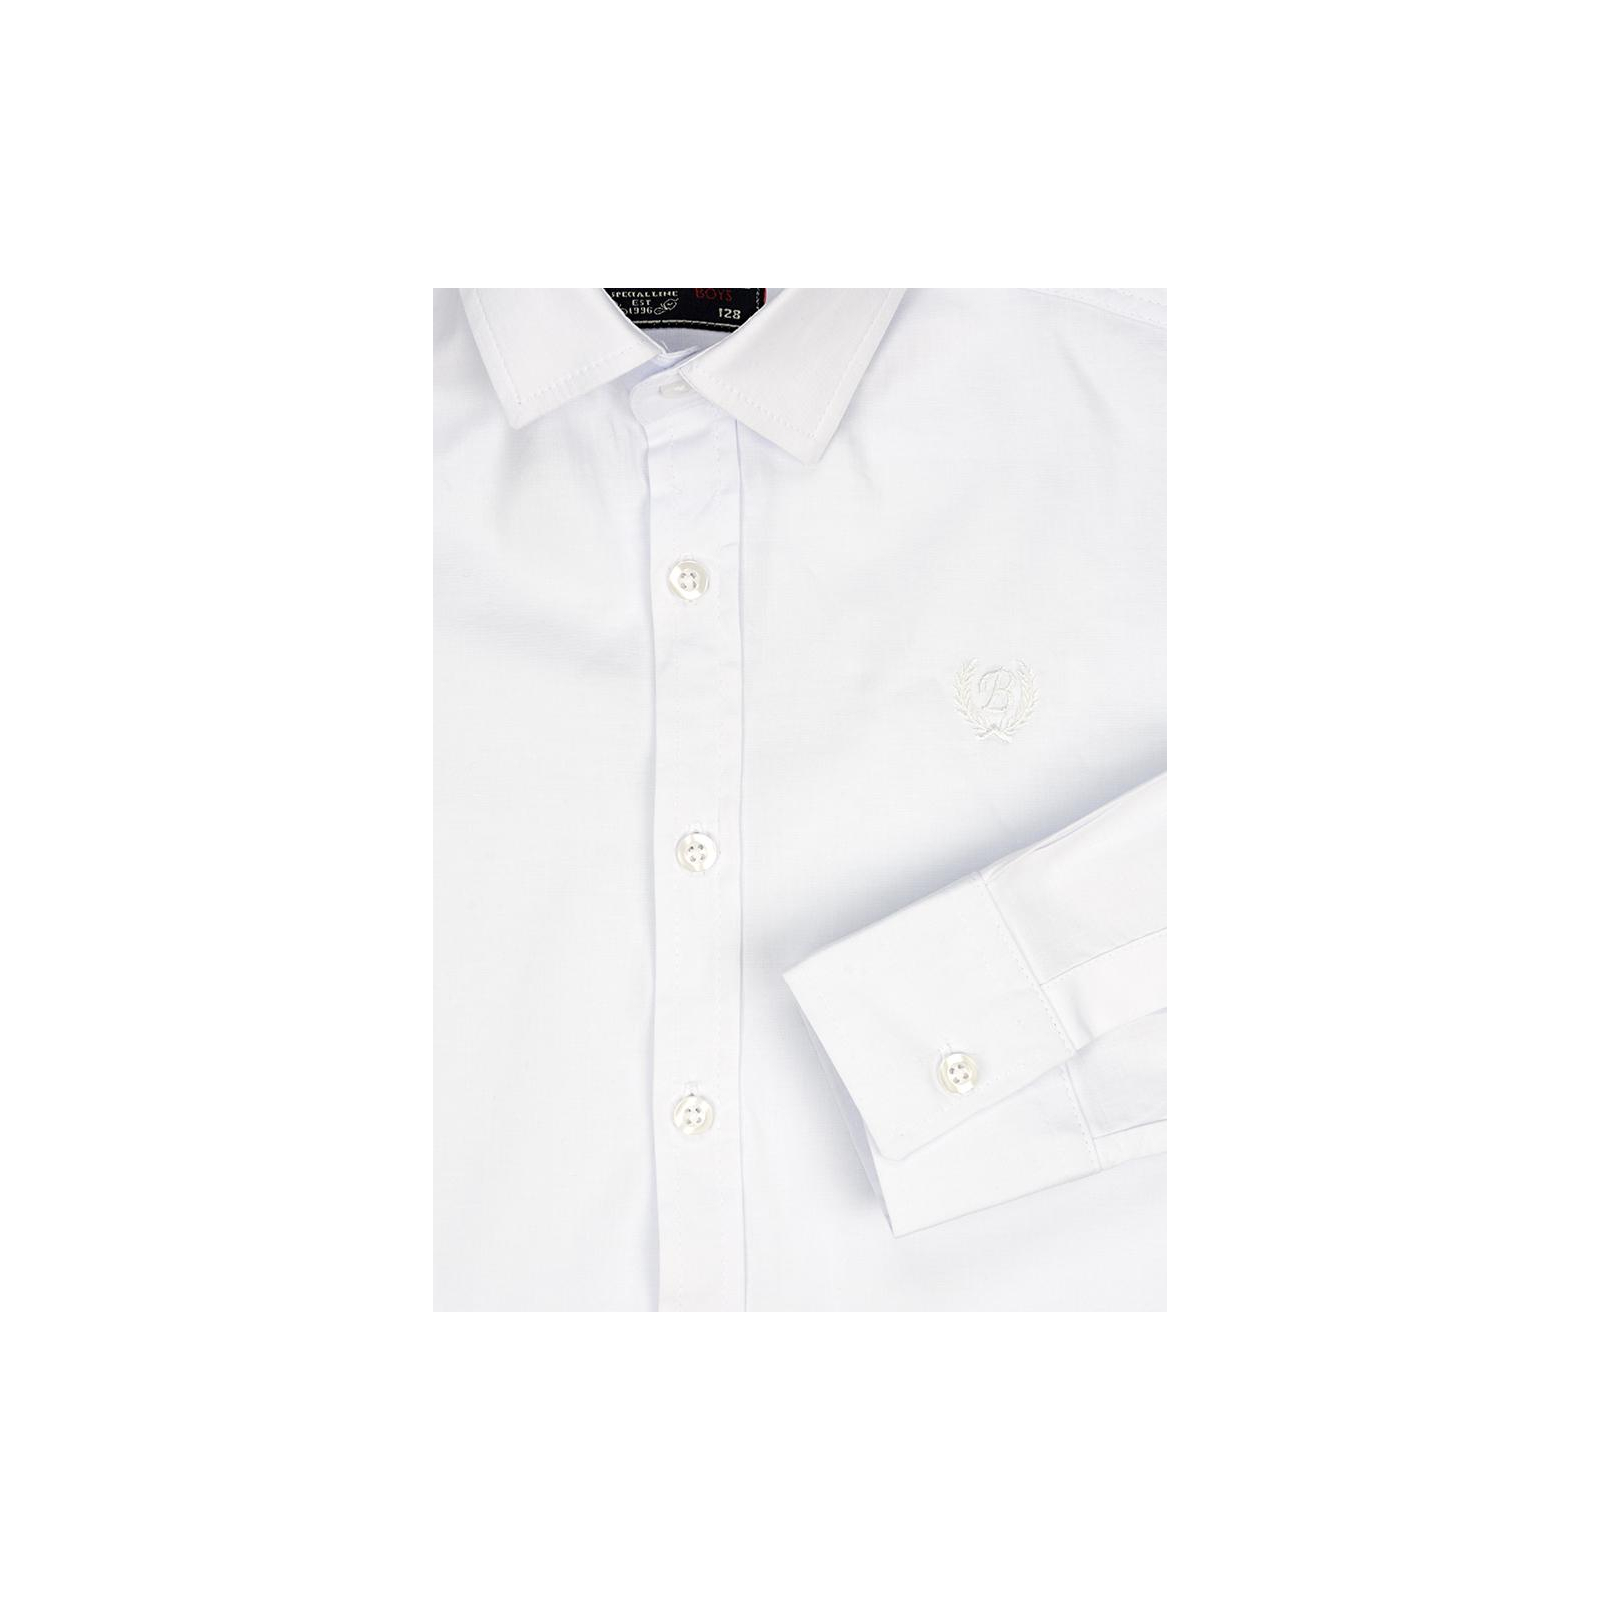 Рубашка Breeze для школы (G-285-128B-white) изображение 3